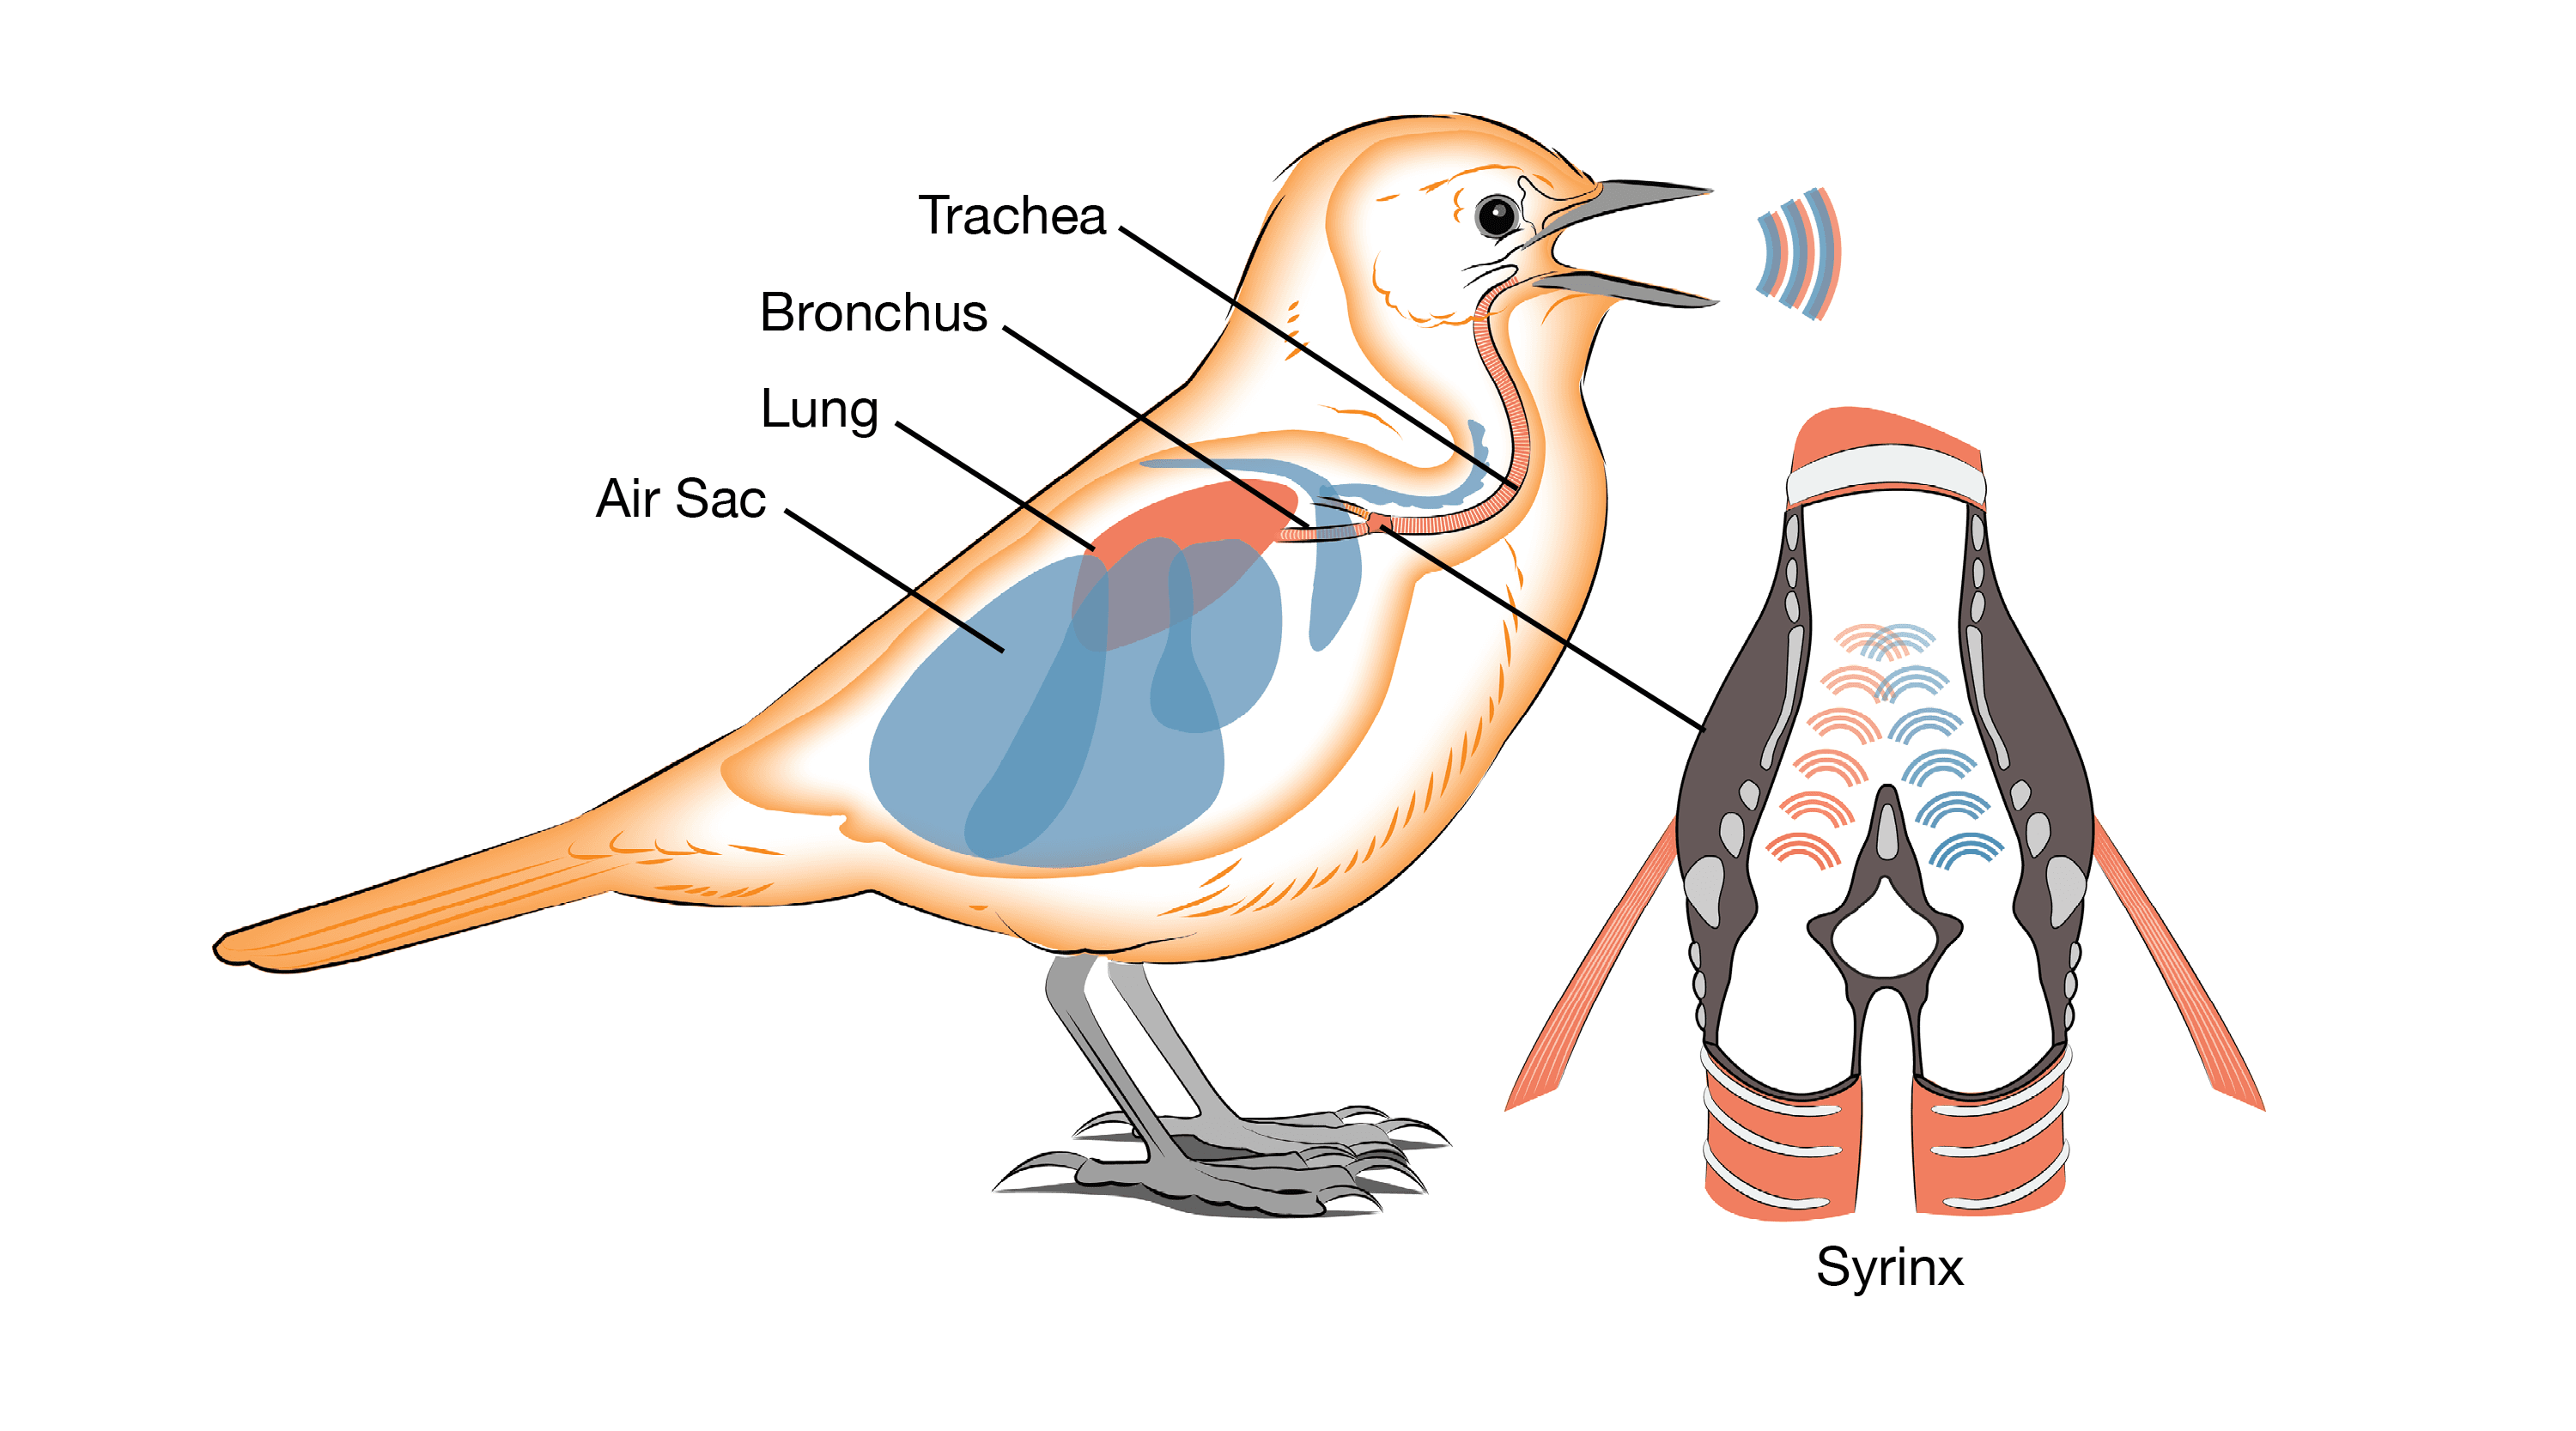 Birds use a syrinx to produce sound